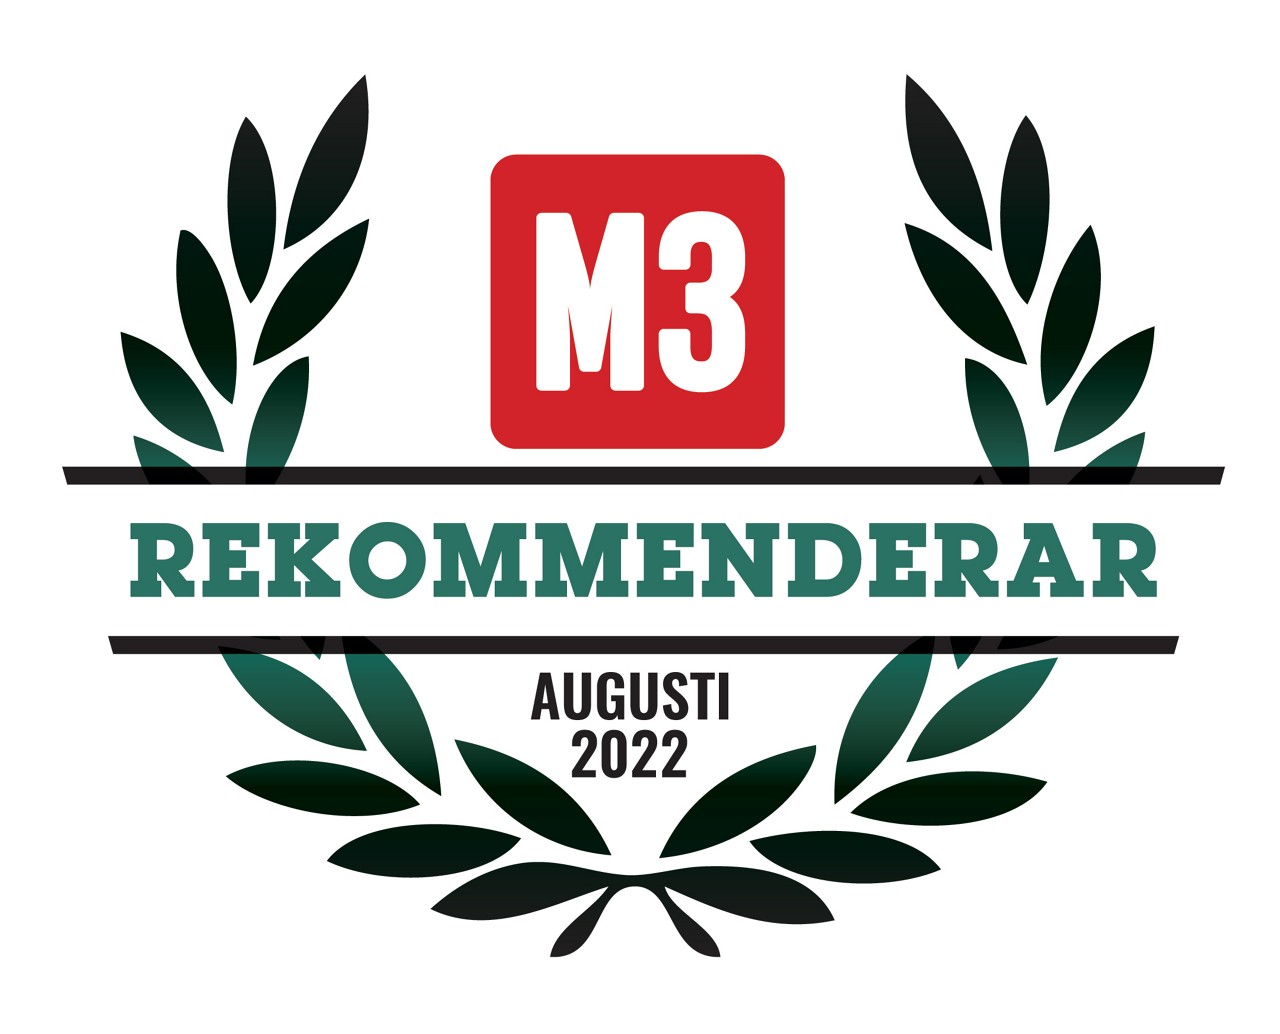 M3 rekommenderar augusti 2022